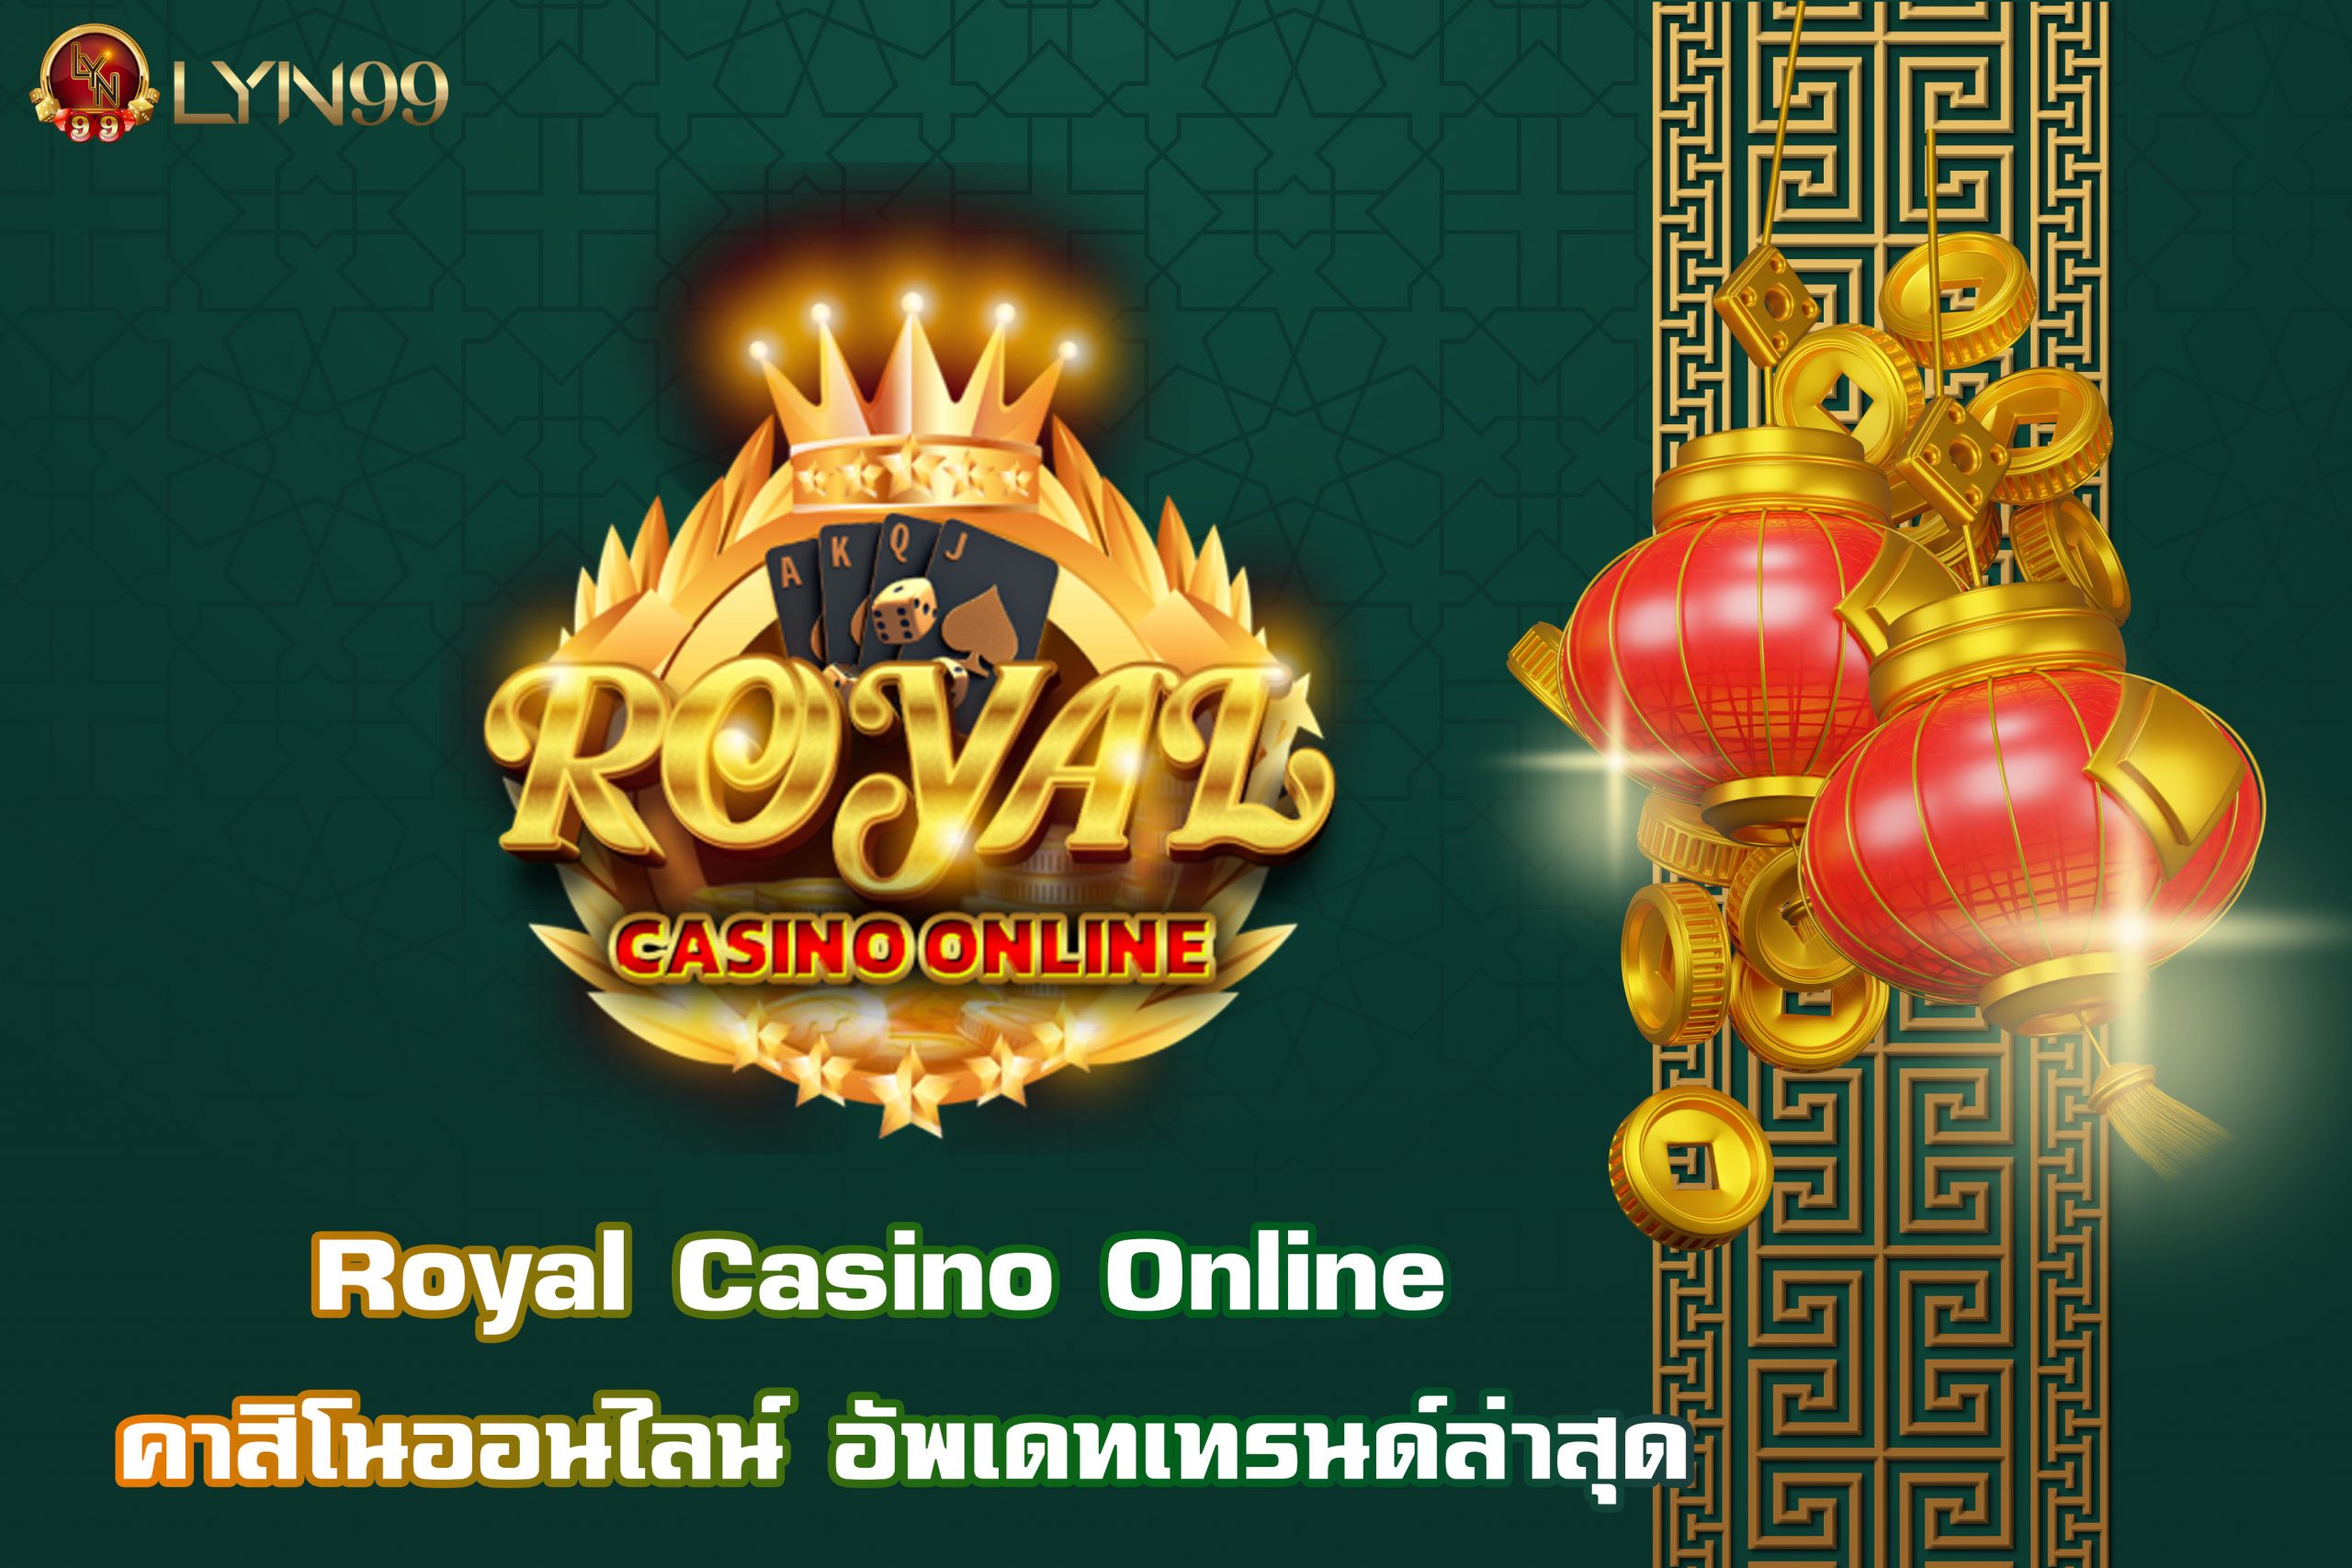 Royal Casino Online คาสิโนออนไลน์ อัพเดทเทรนด์ล่าสุด